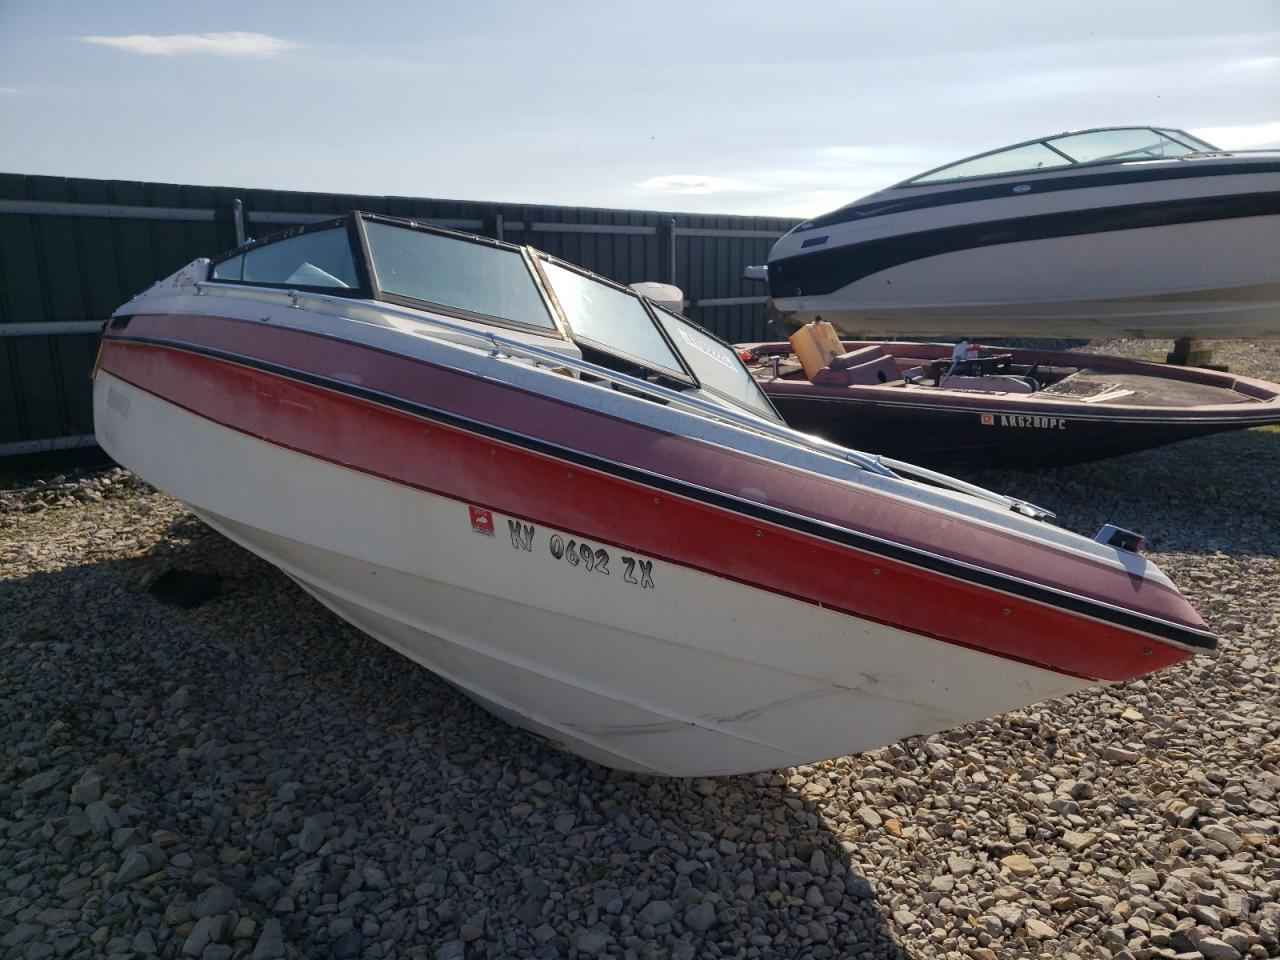 RNK2849***** 1989 Rink Boat